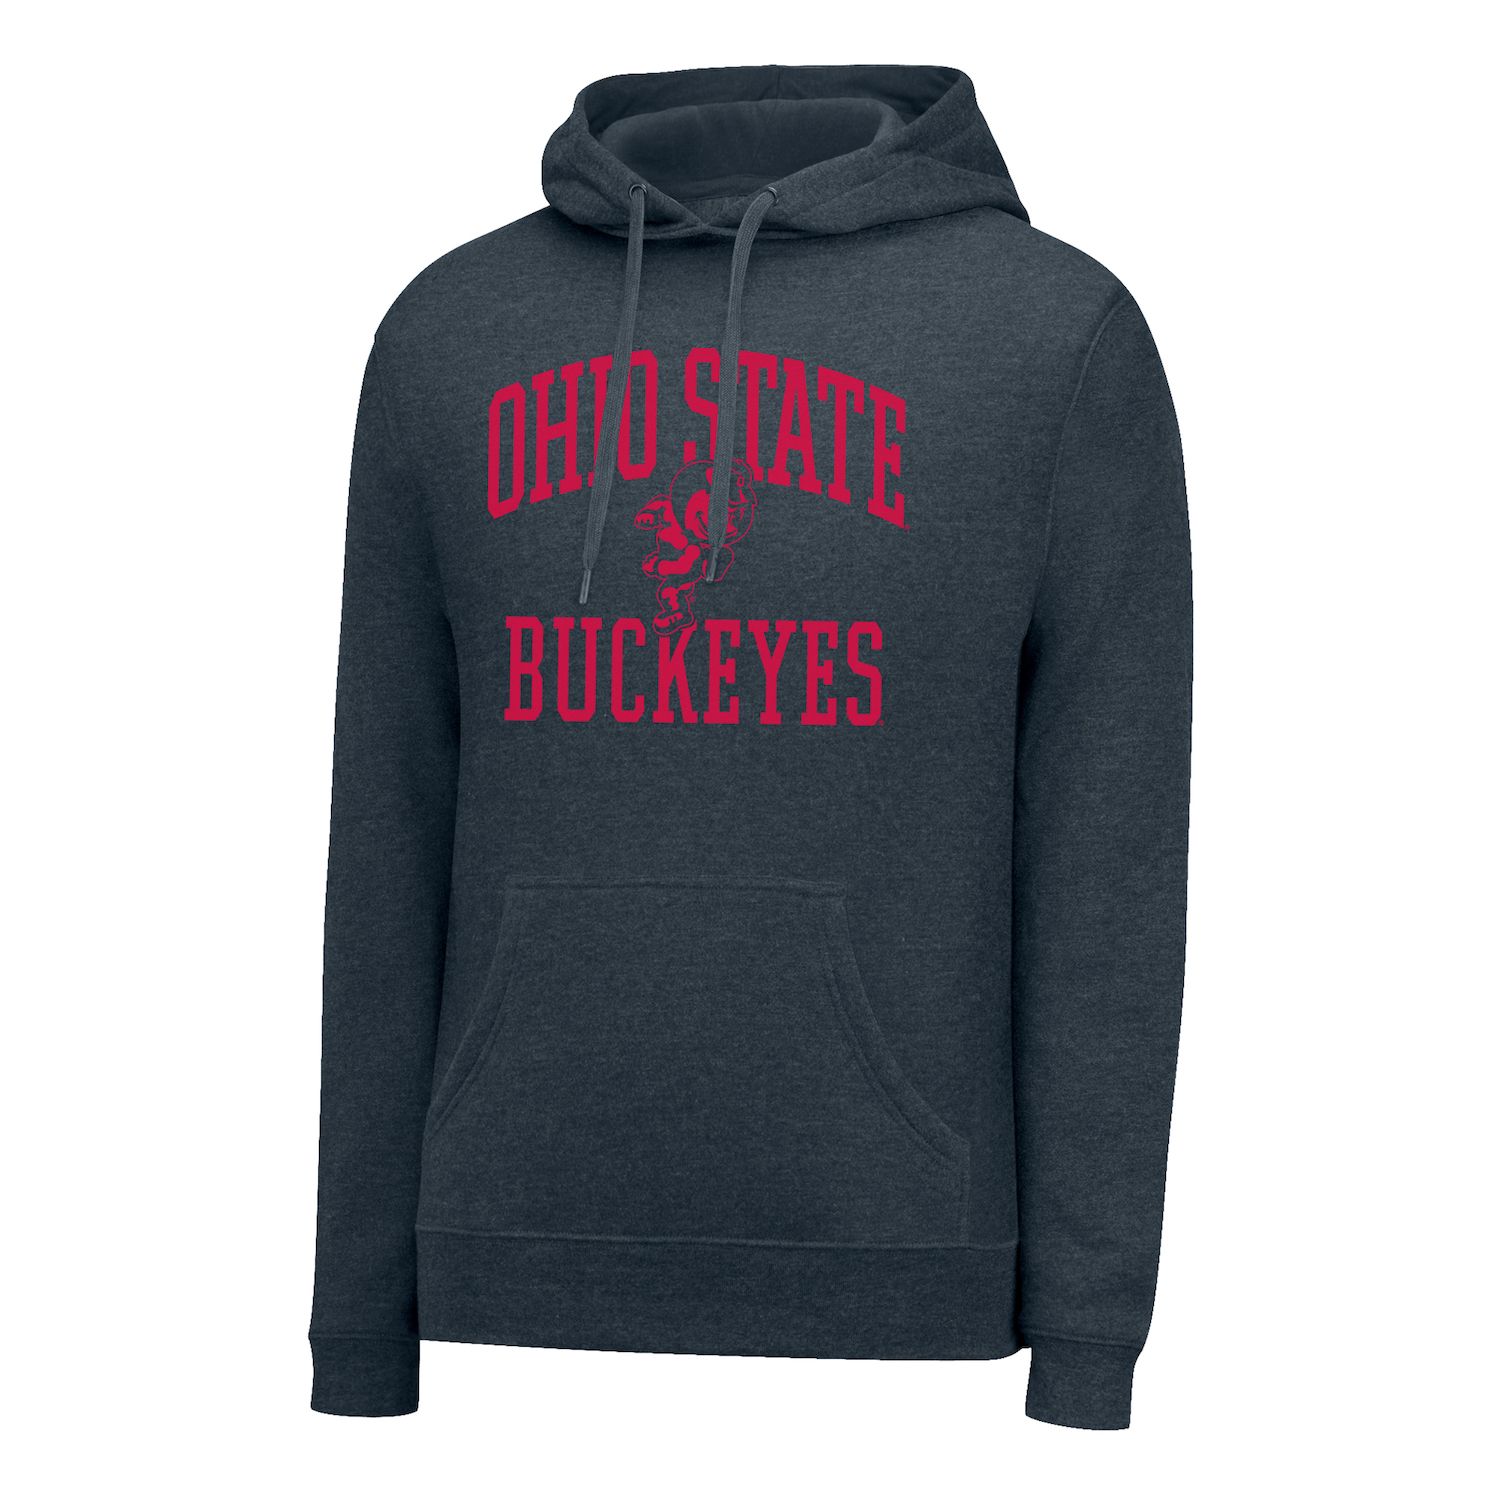 ohio state buckeyes men's hoodies